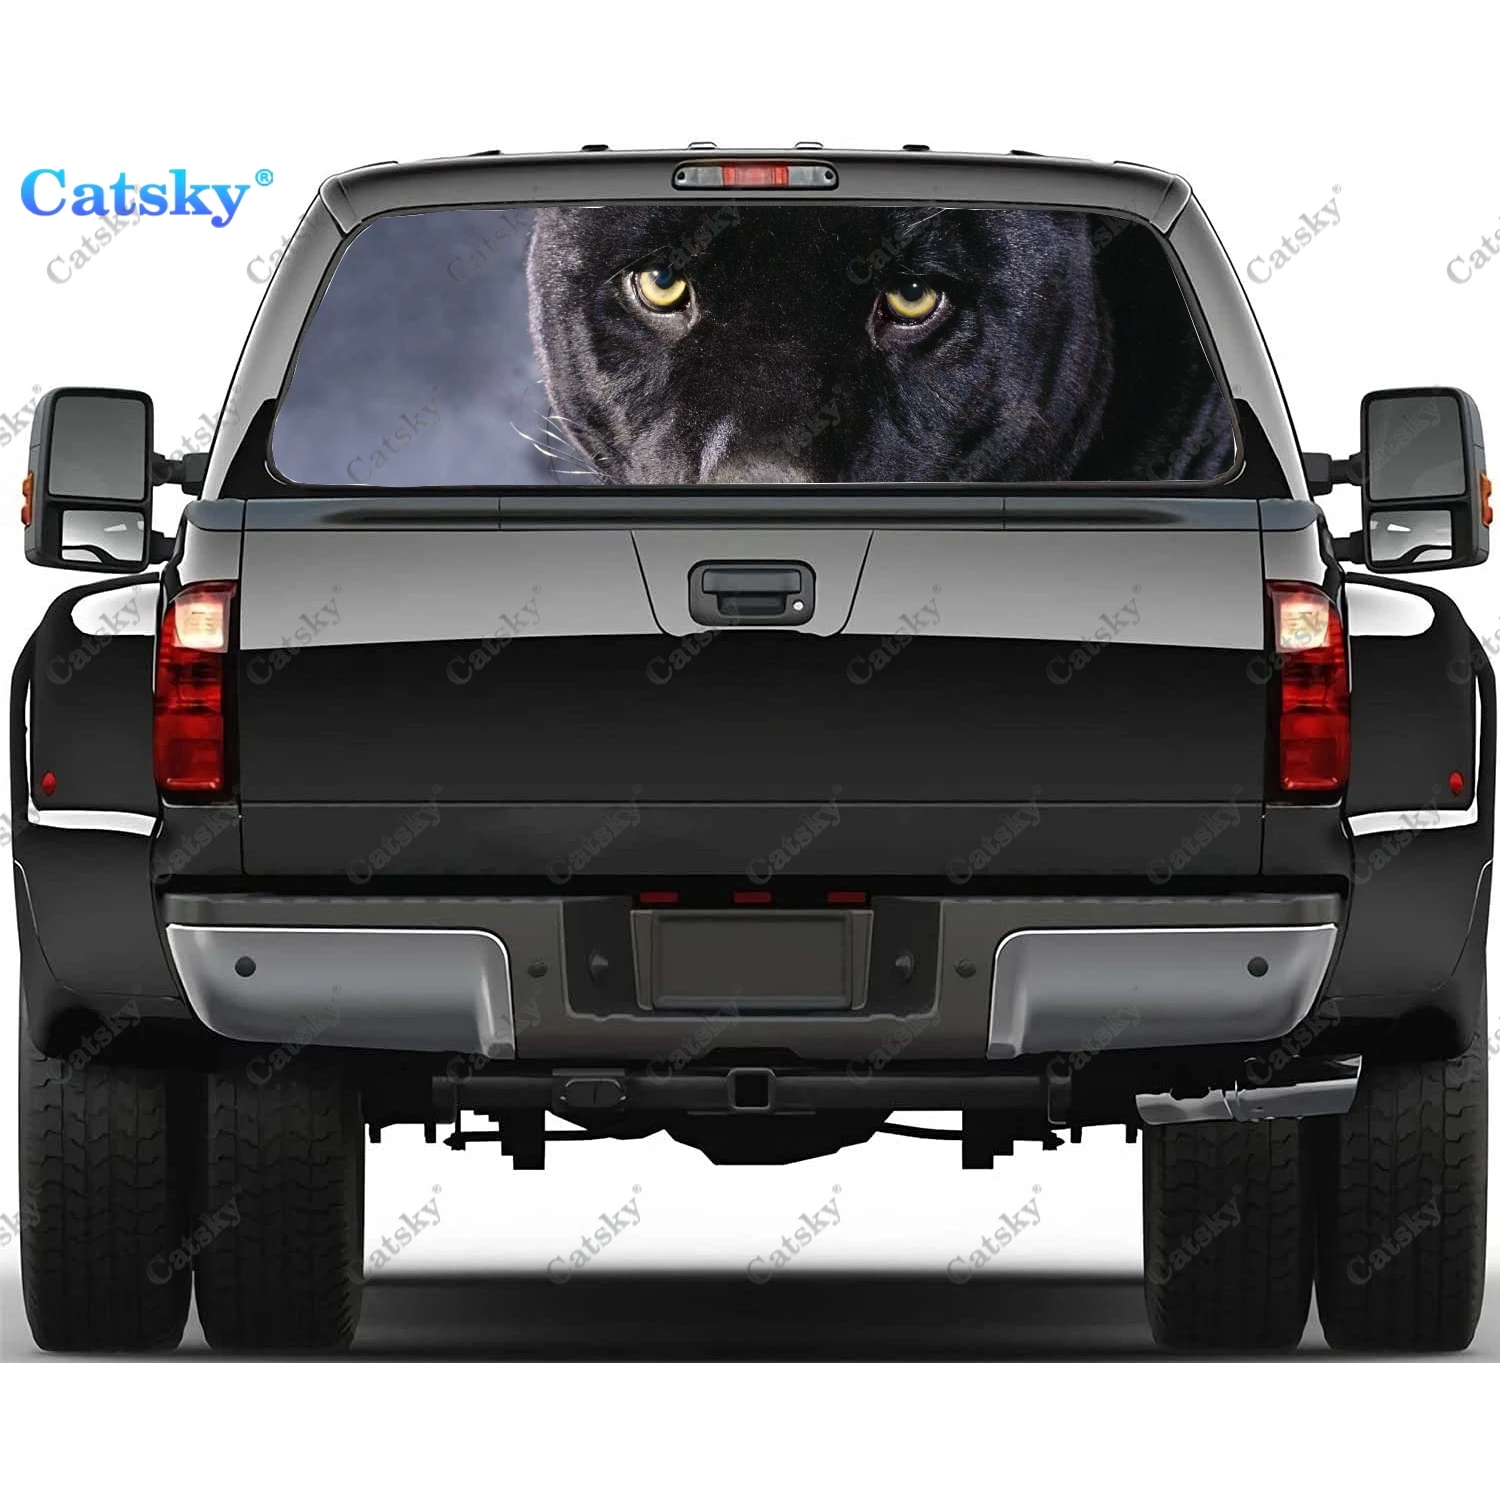 

Animal - Black Panther Rear Window Decals for Truck,Pickup Window Decal,Rear Window Tint Graphic Perforated Vinyl Truck Sticker